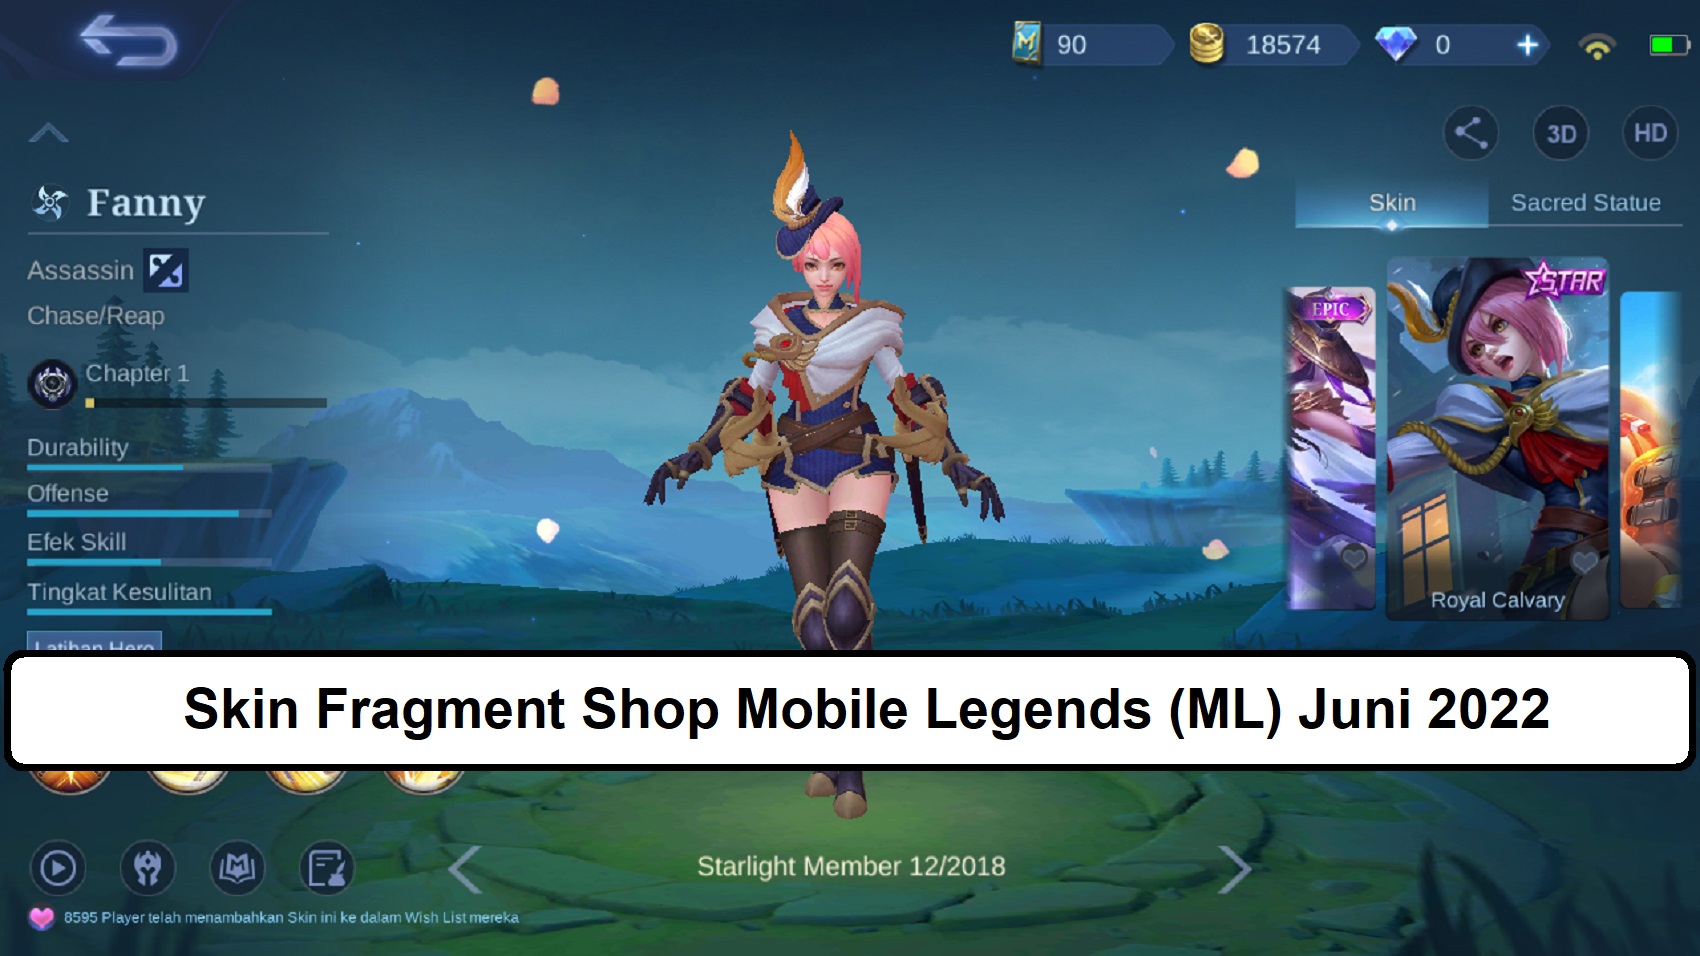 Сборка на чичи мобайл. Shop mobile Legends. Гачи шоп мобайл легенд. Новый Интерфейс мобайл легенд в бою. Звёздный участник mobile Legends декабрь 2022.